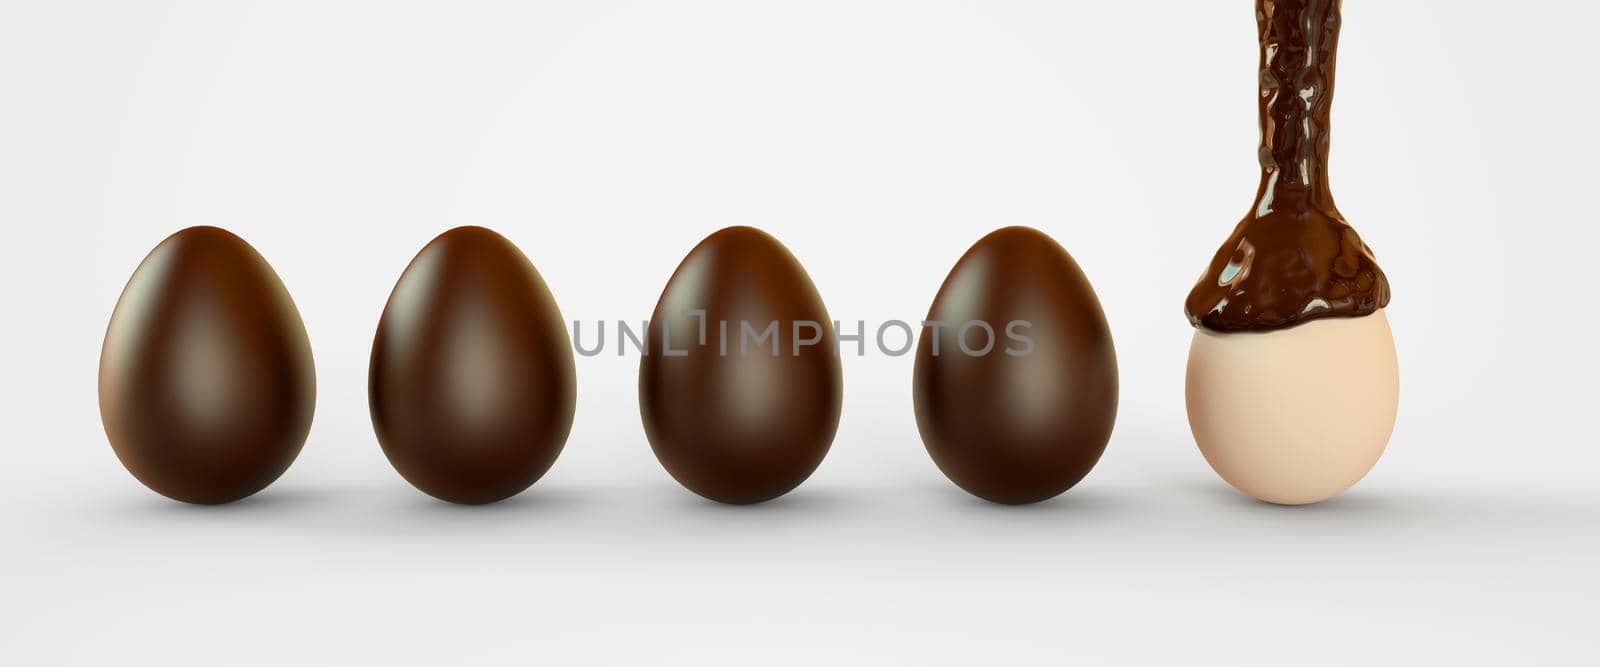 Eggs in chocolate. Easter eggs. 3D rendering illustration.